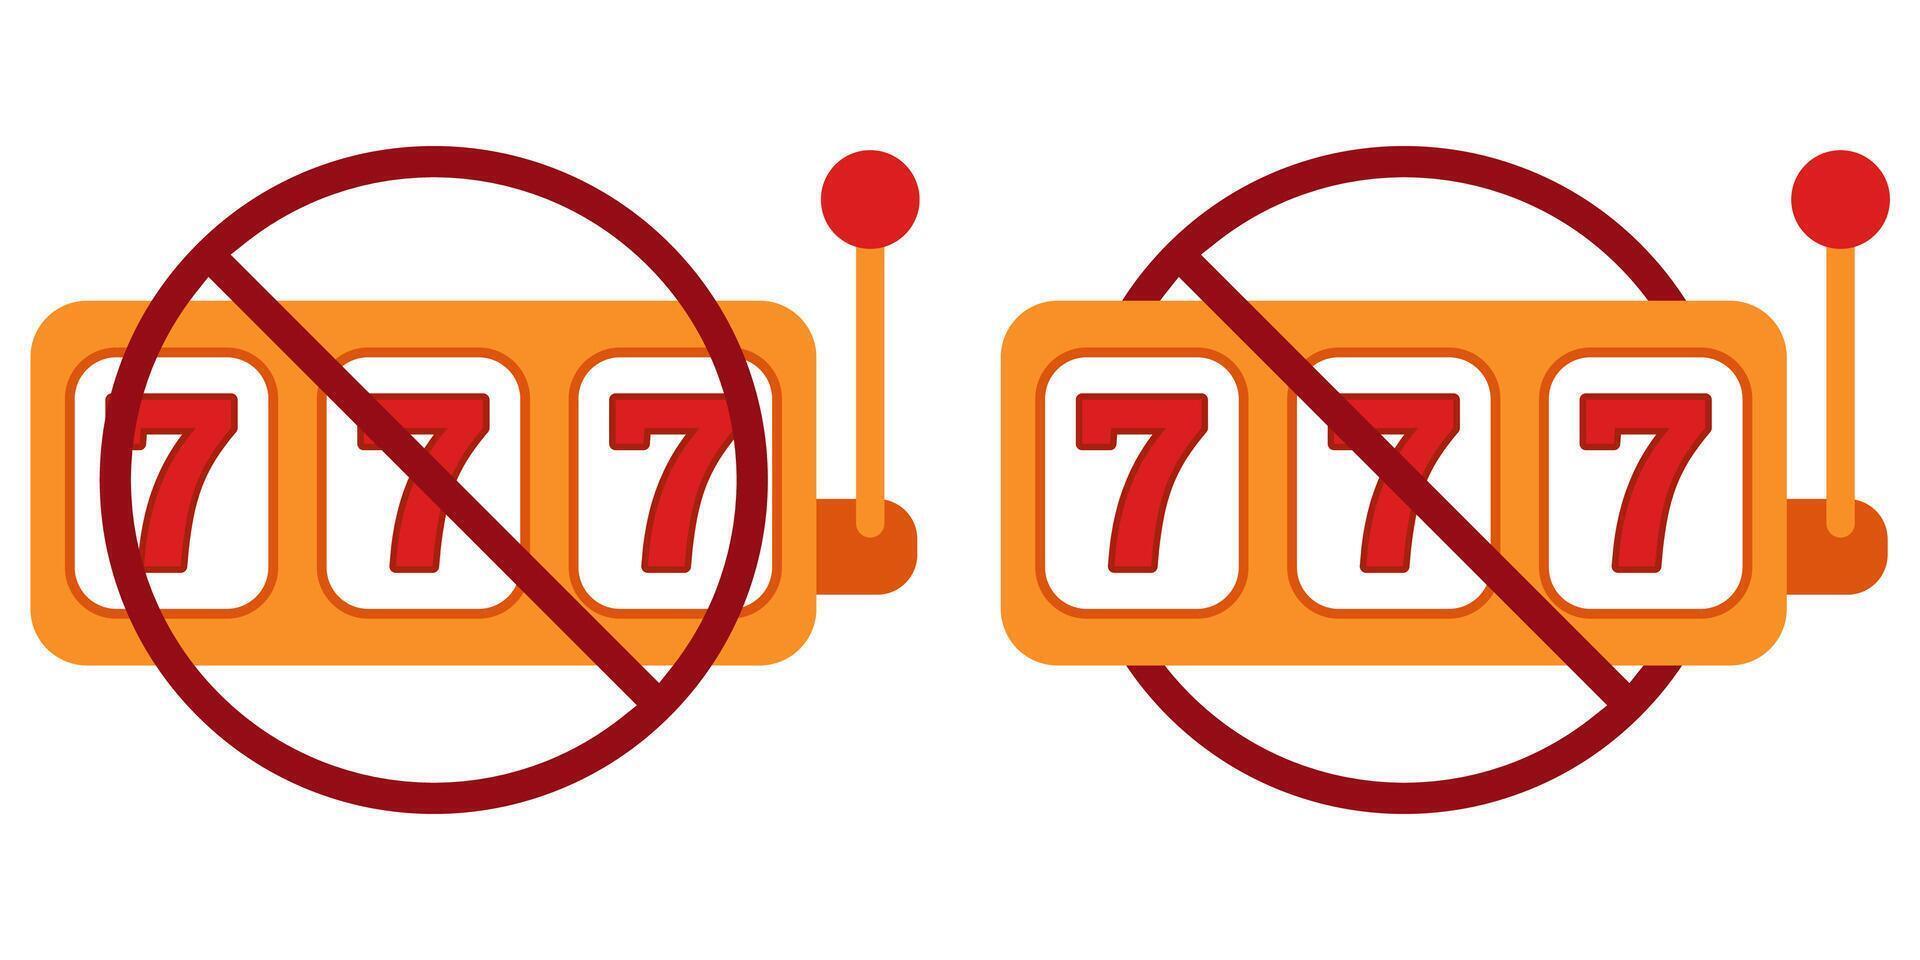 ilegal juego prohibición prohibir icono. no permitido en línea casino. vector